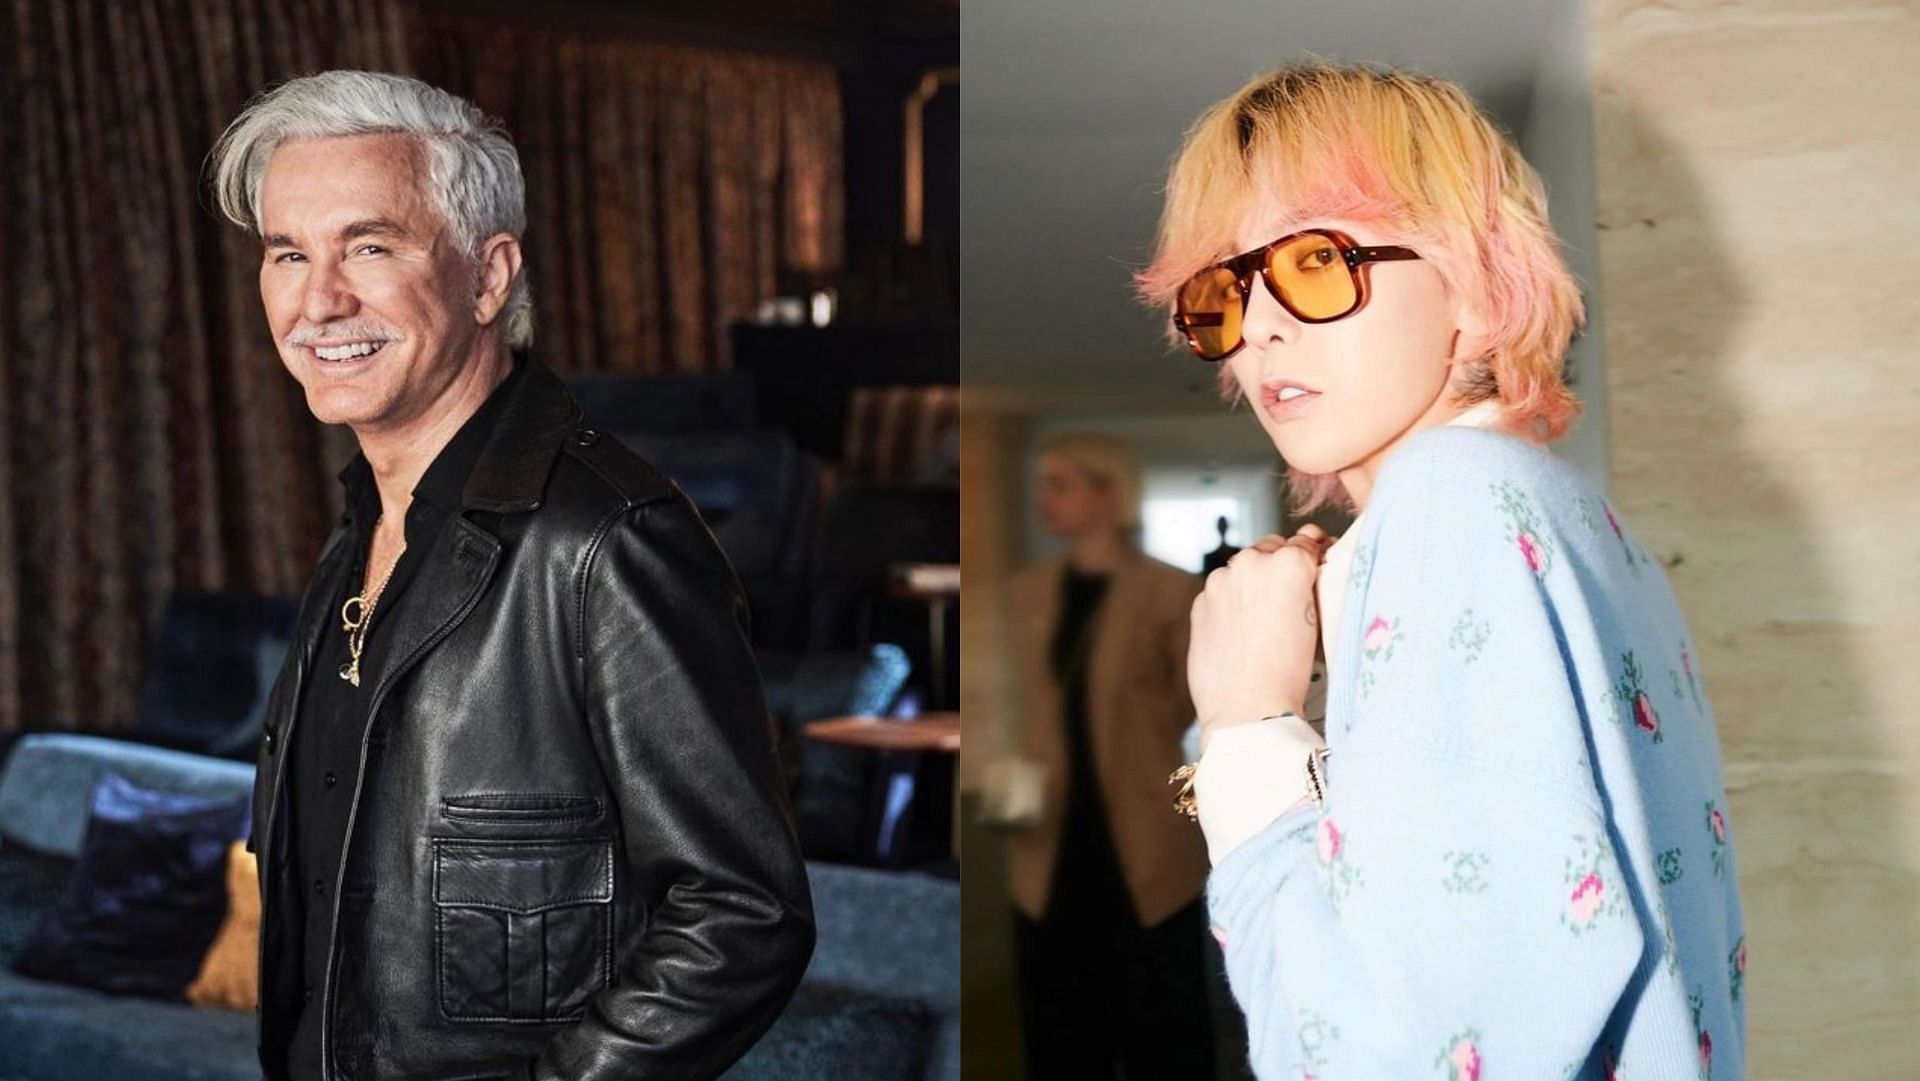 Baz Luhrmann collaborates with King of K-pop G-Dragon for new movie Elvis. (Images via Instagram/@bazluhrmann @xxxibgdrgn)